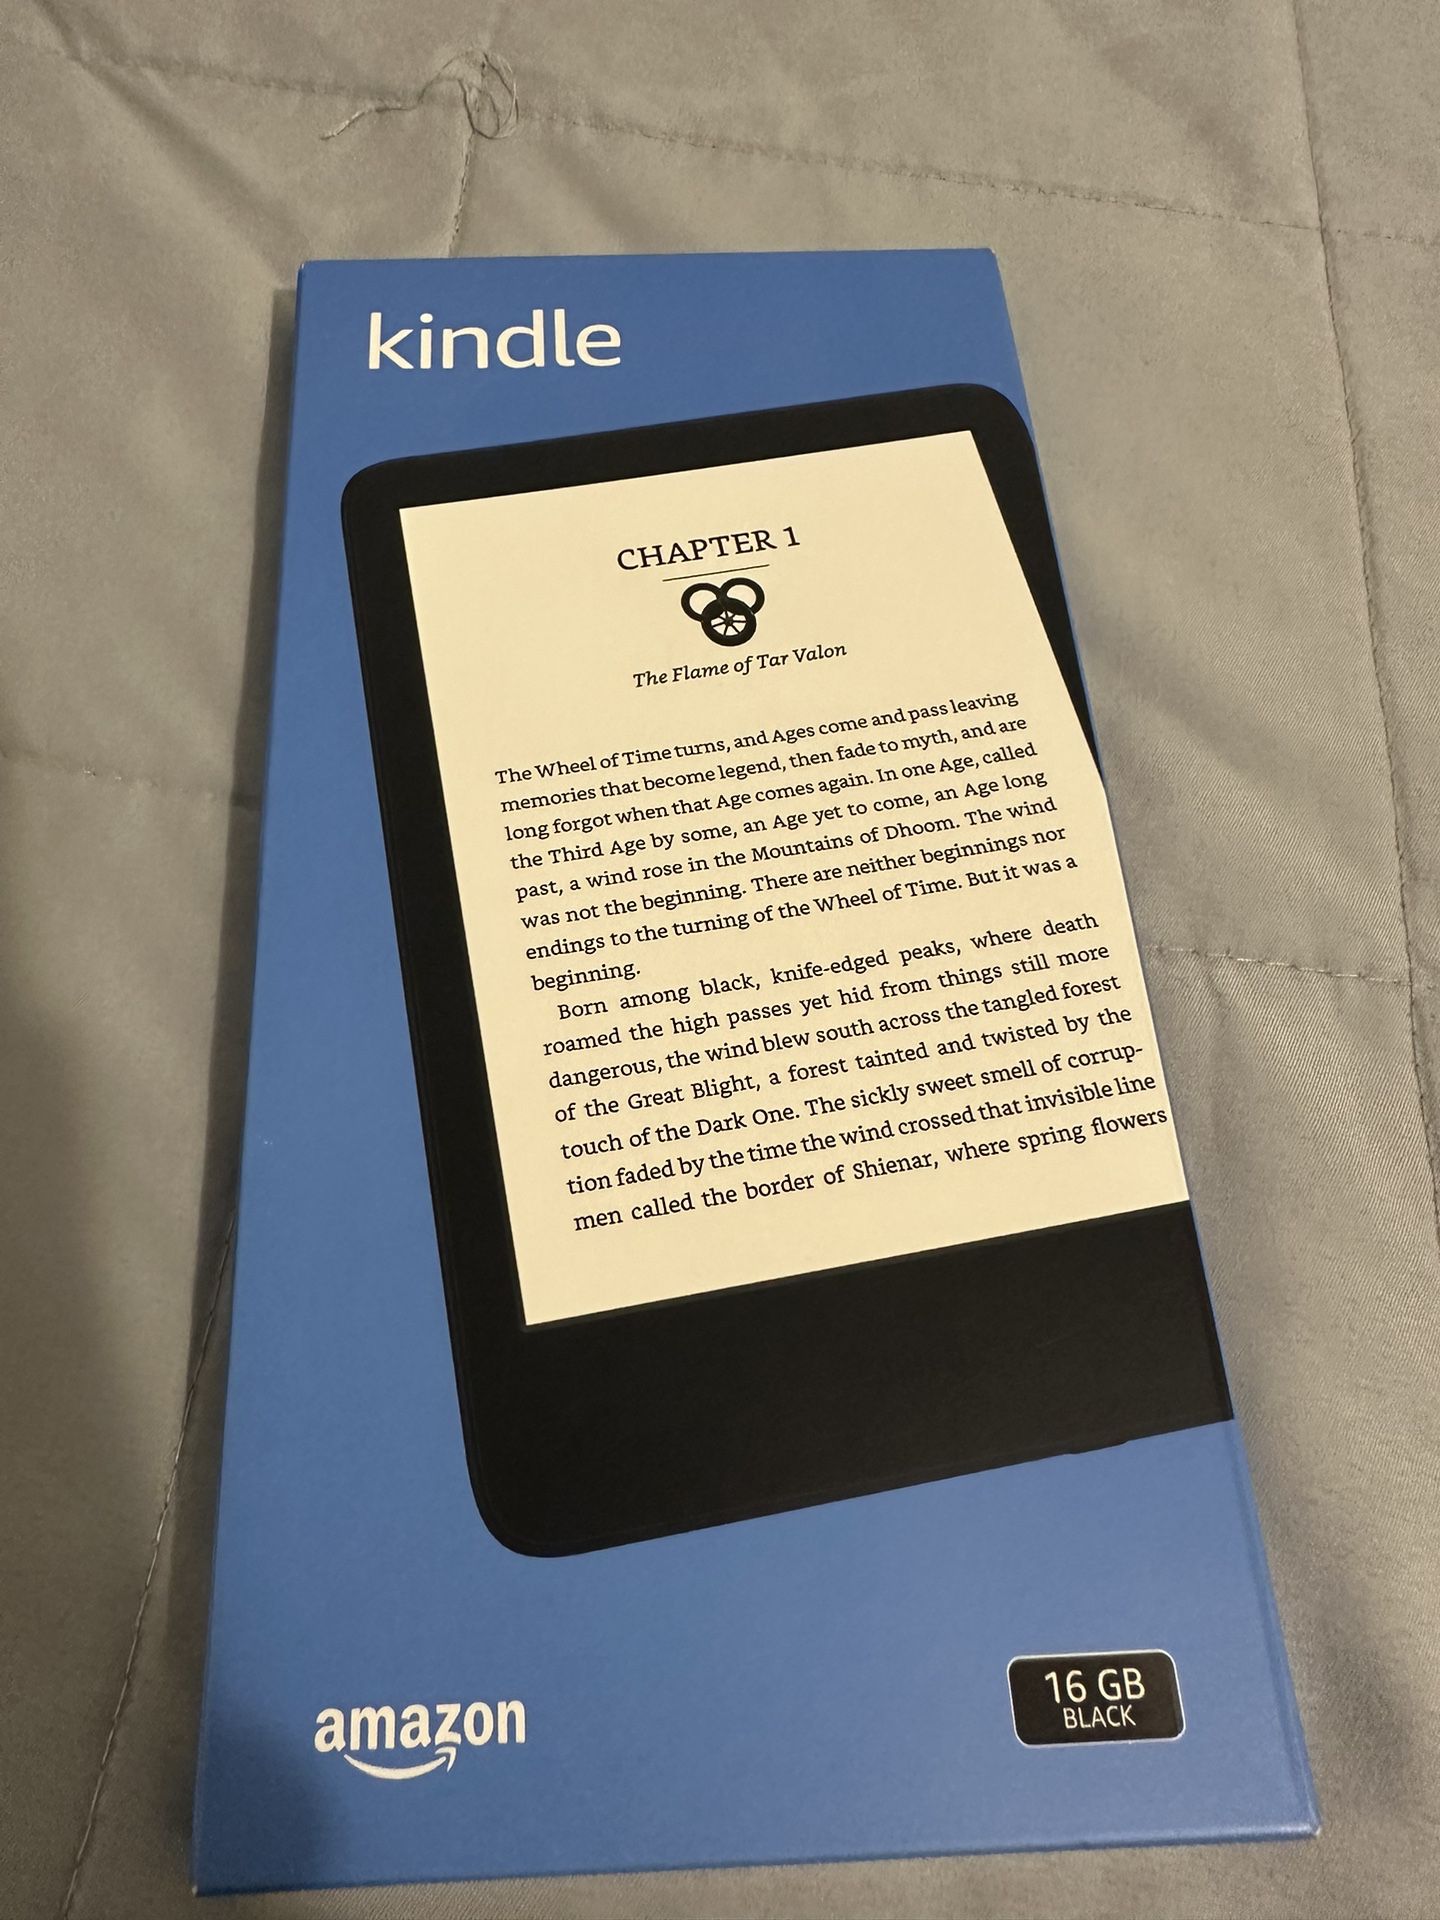 Amazon Kindle 16 GB Black (NEW)